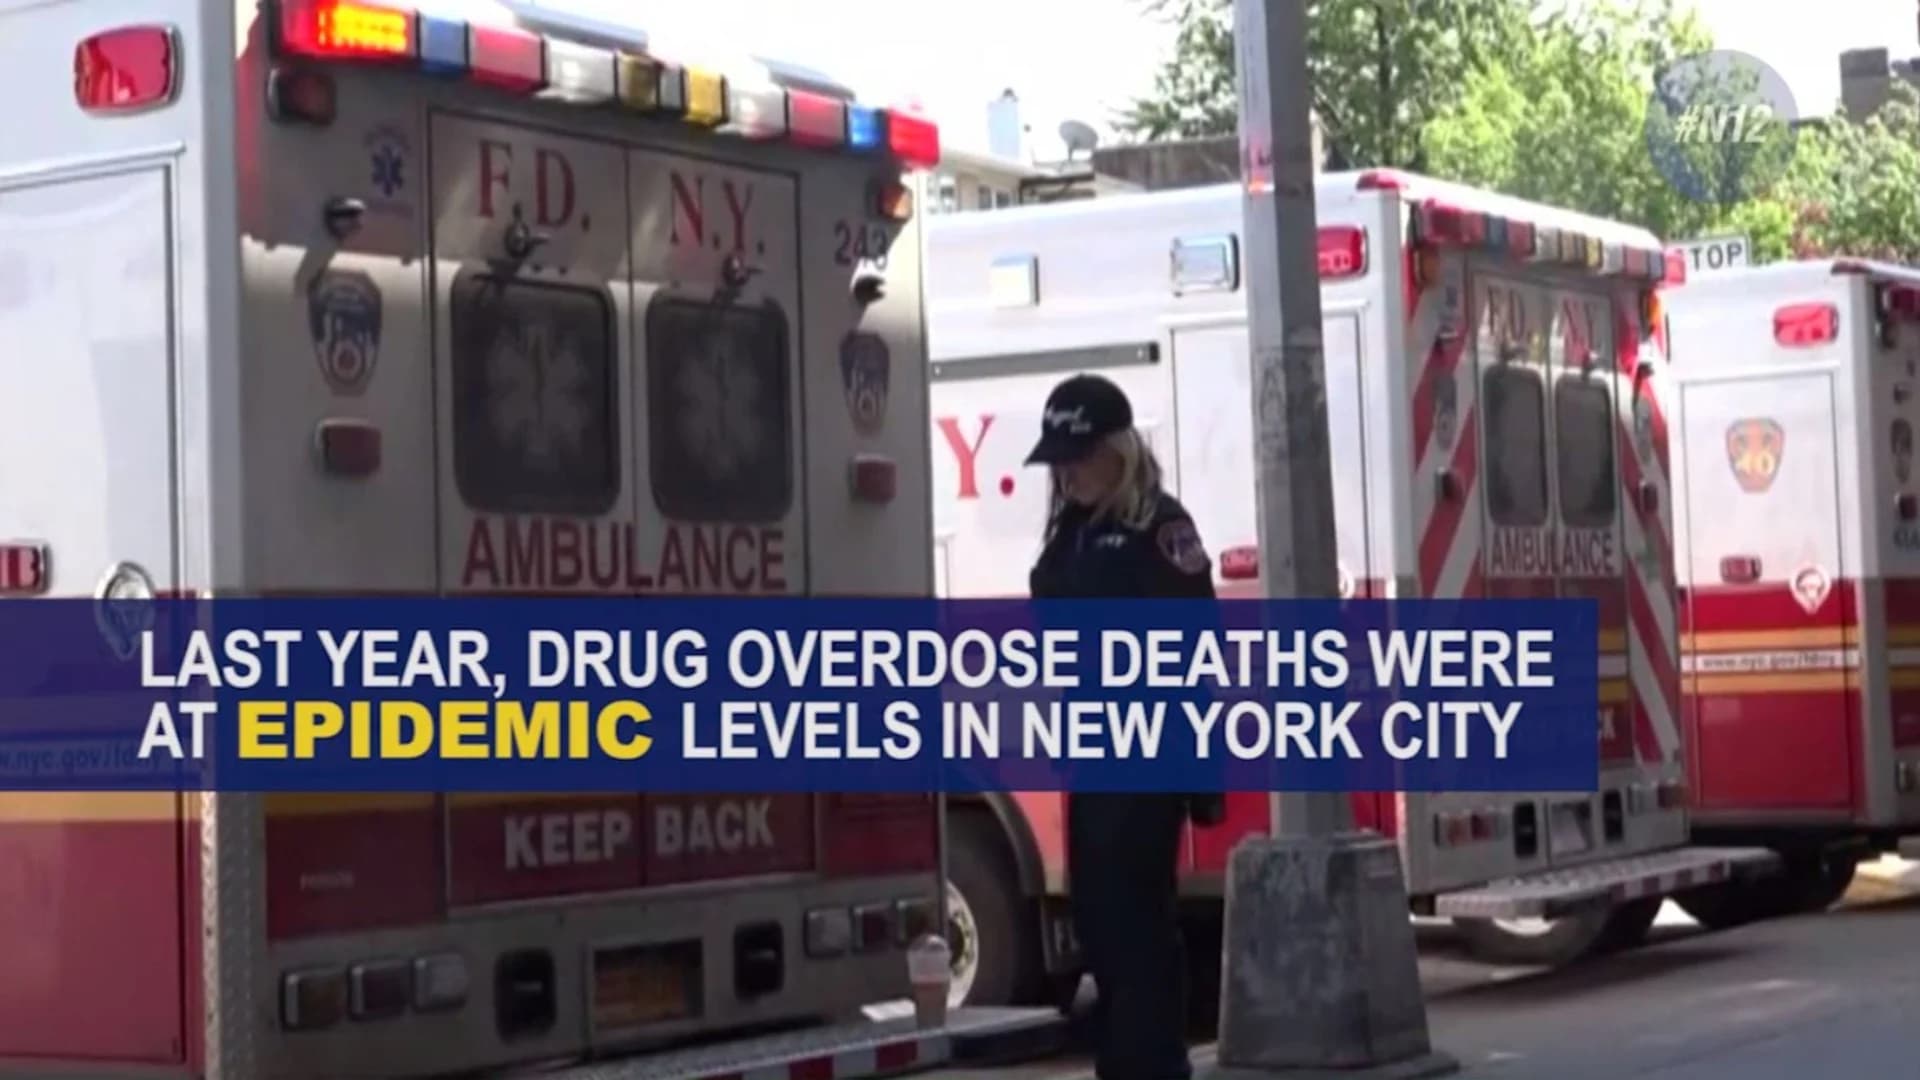 #N12BK: Drug overdoses in New York City